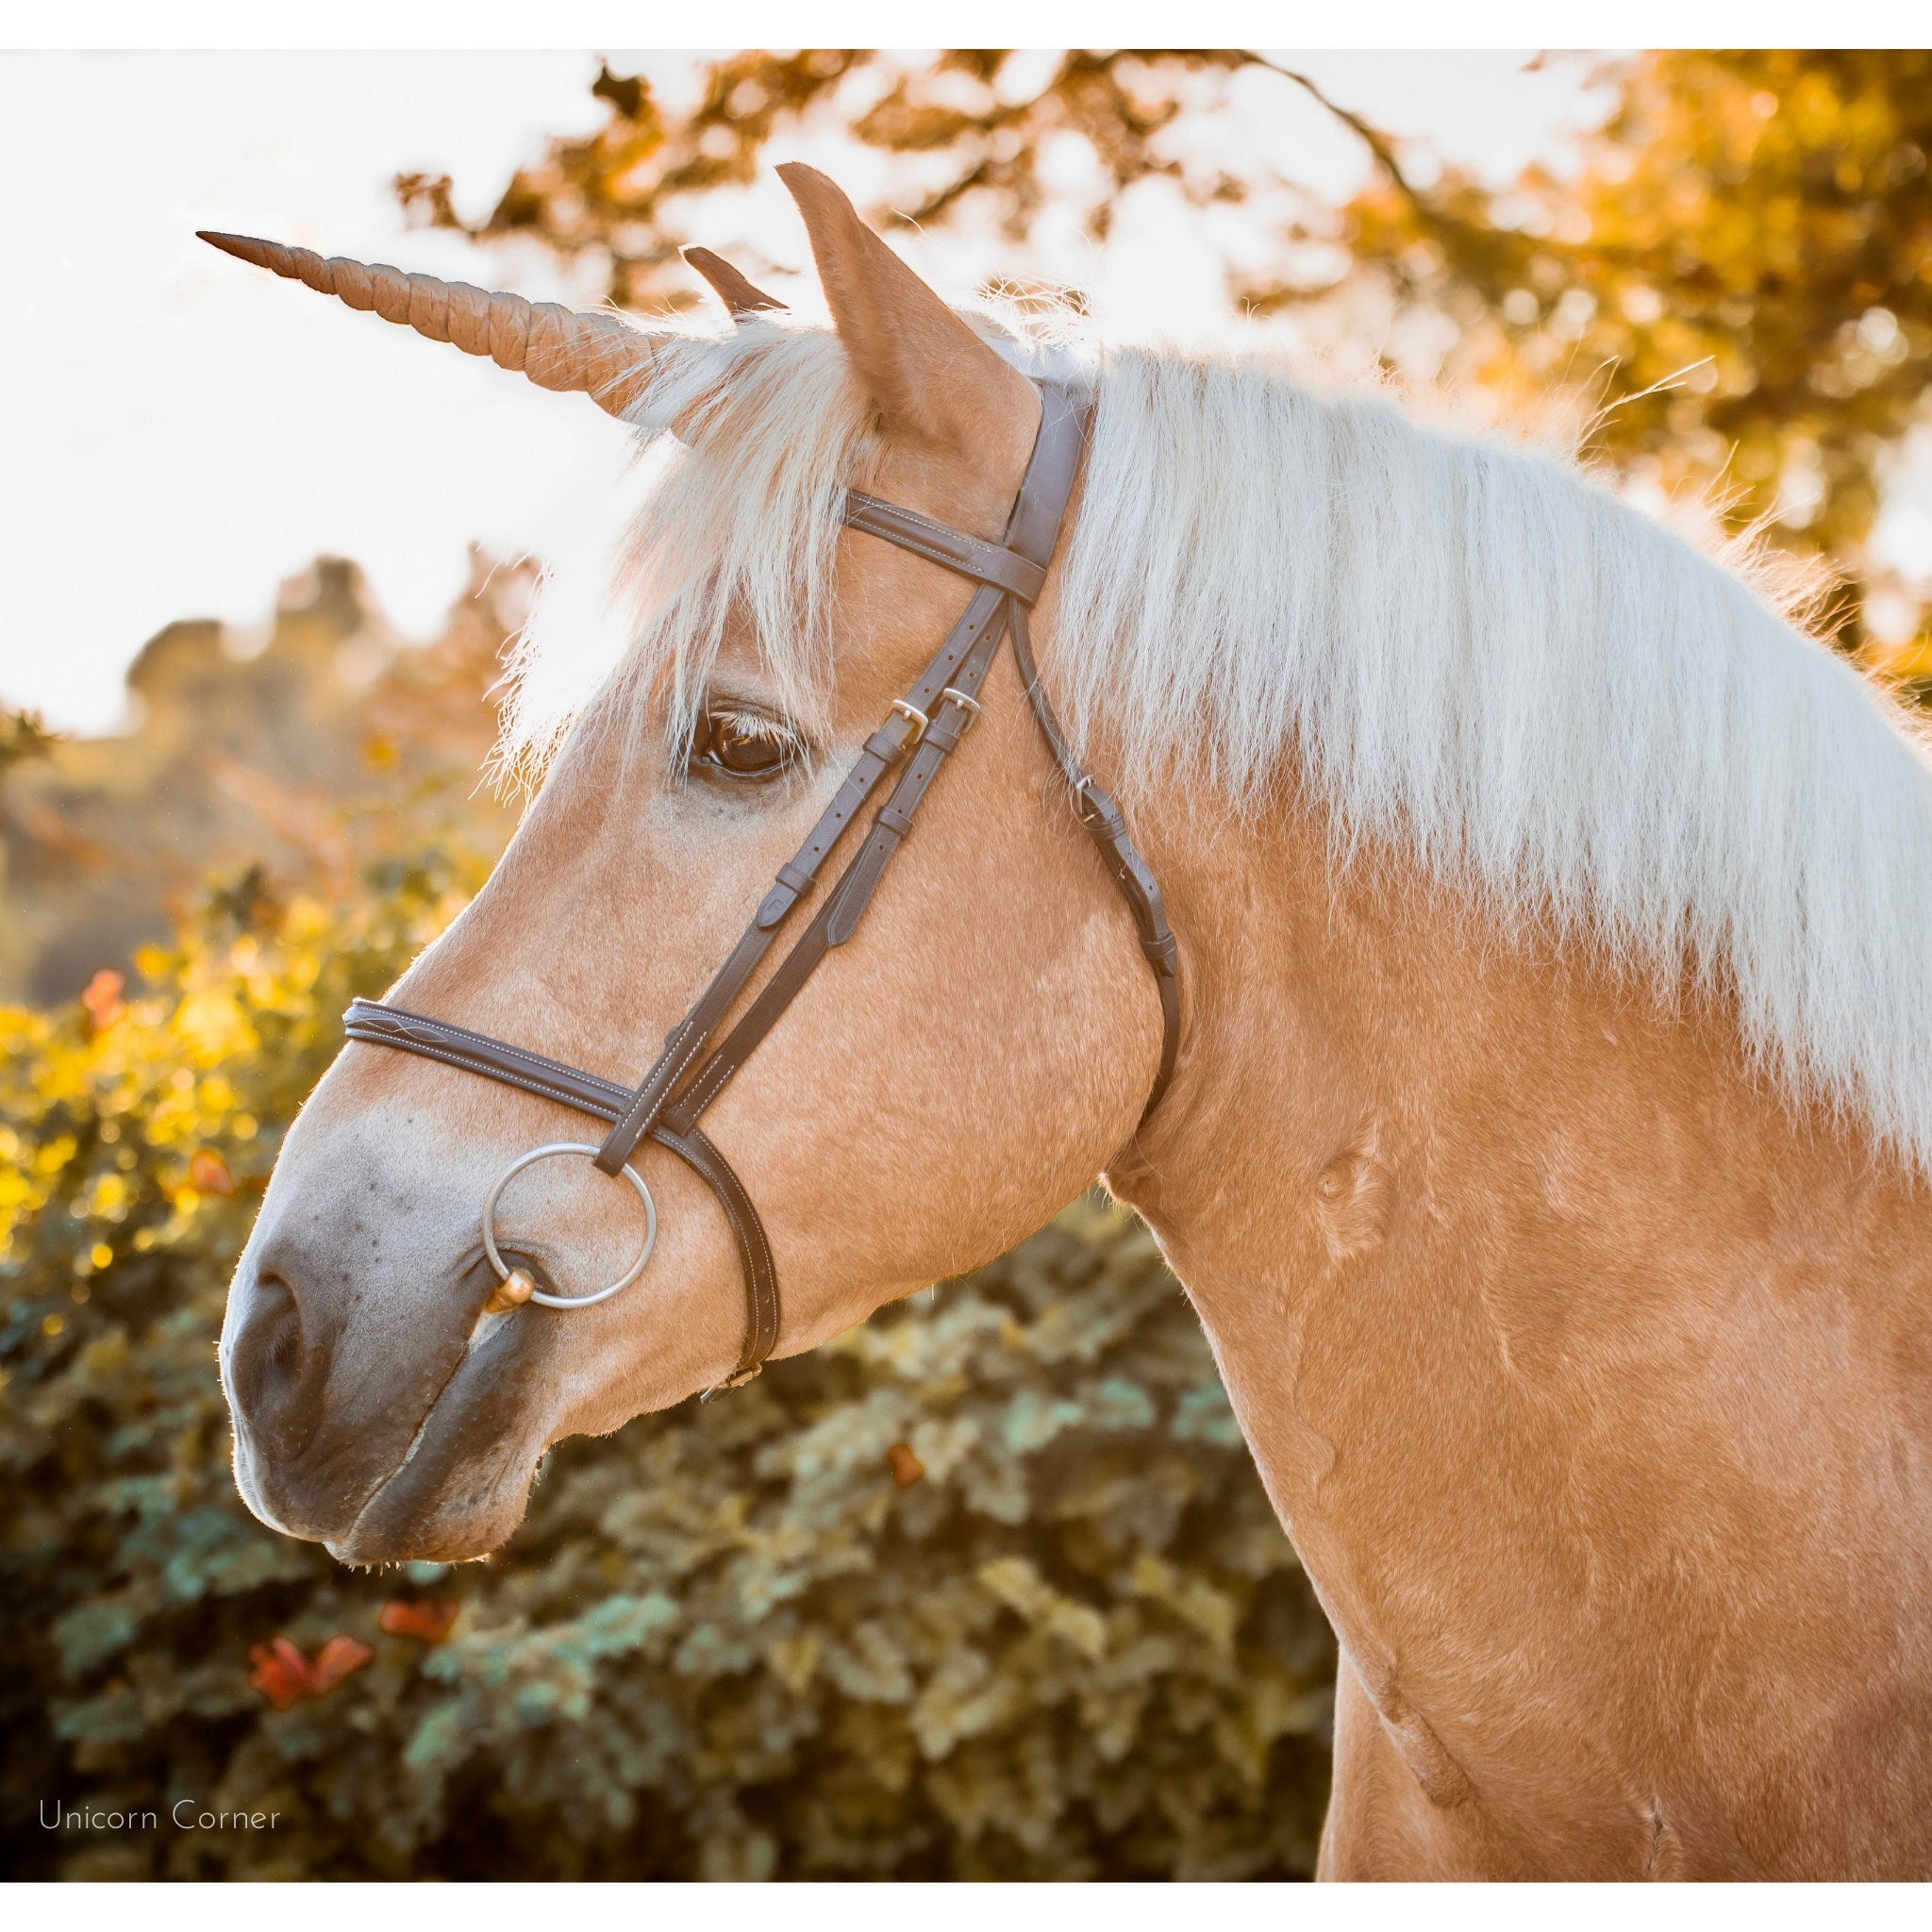 Textured Unicorn Horn for Horses and Ponies / Easy Adjustable Straps /  Realistic Unicorn Horn Browband / Unicorn Corner Original Design 